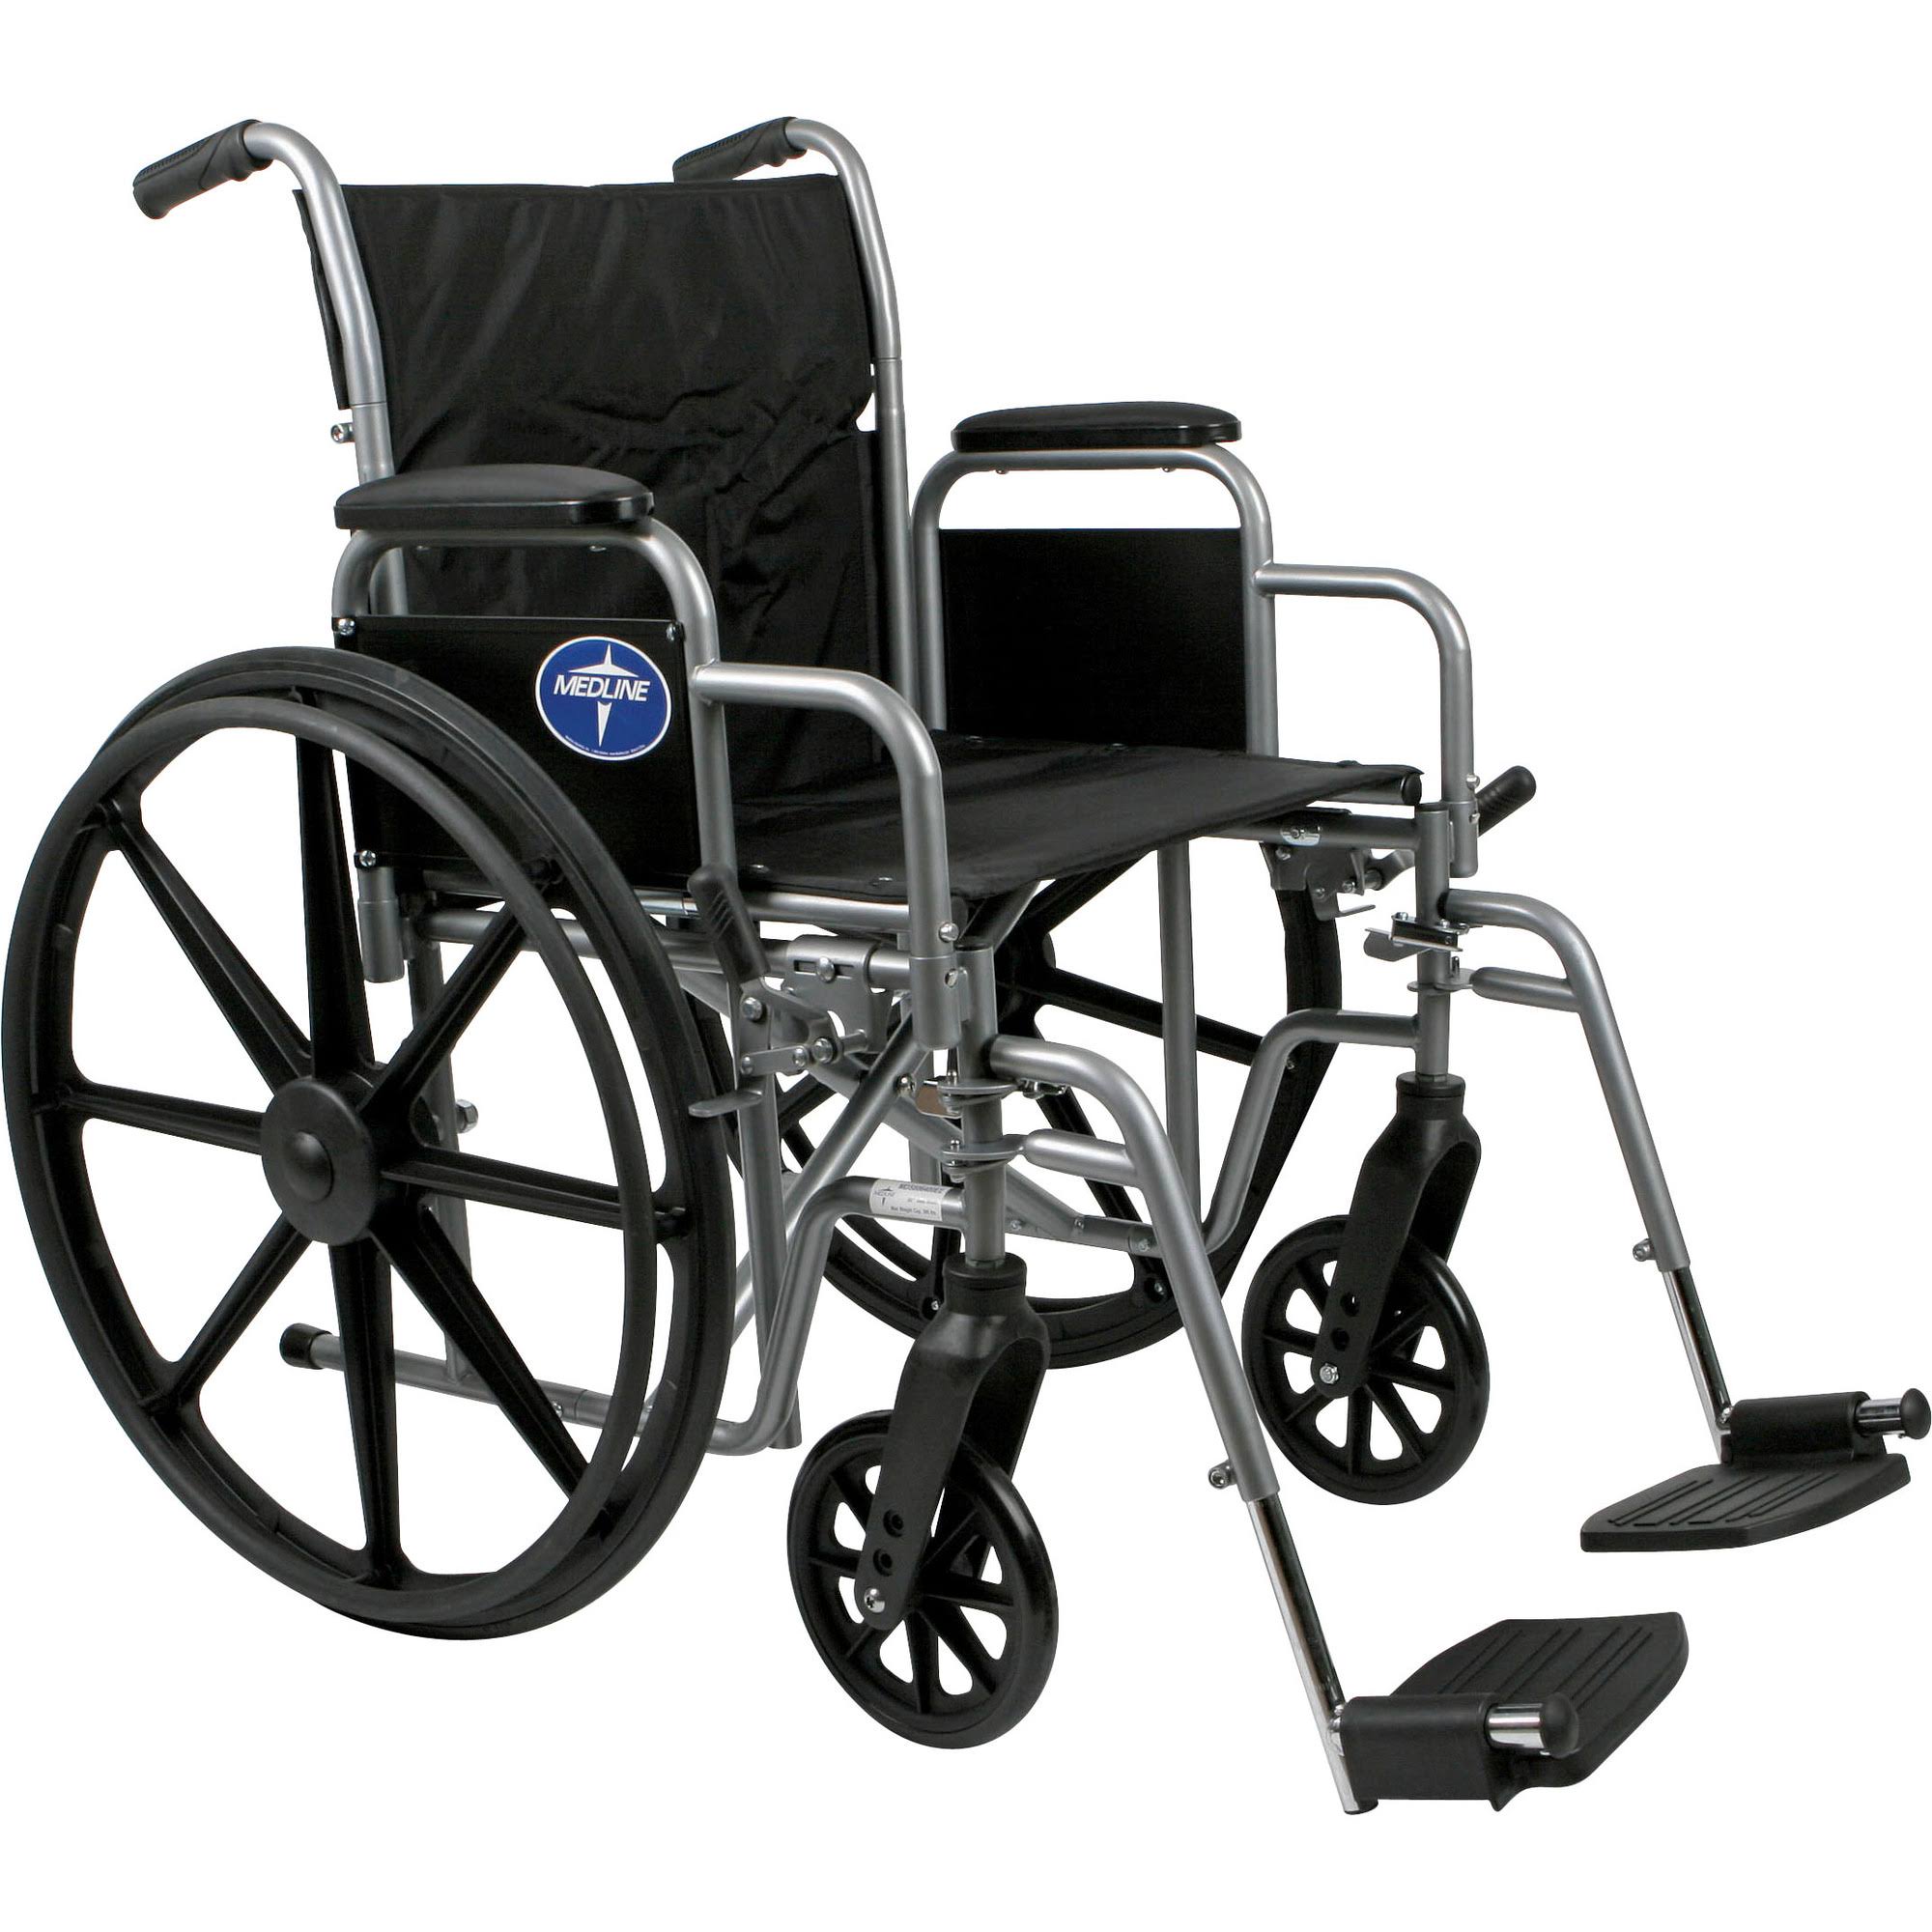 Medline Excel K1 Basic Wheelchair - With Detach Swing Way Footrests